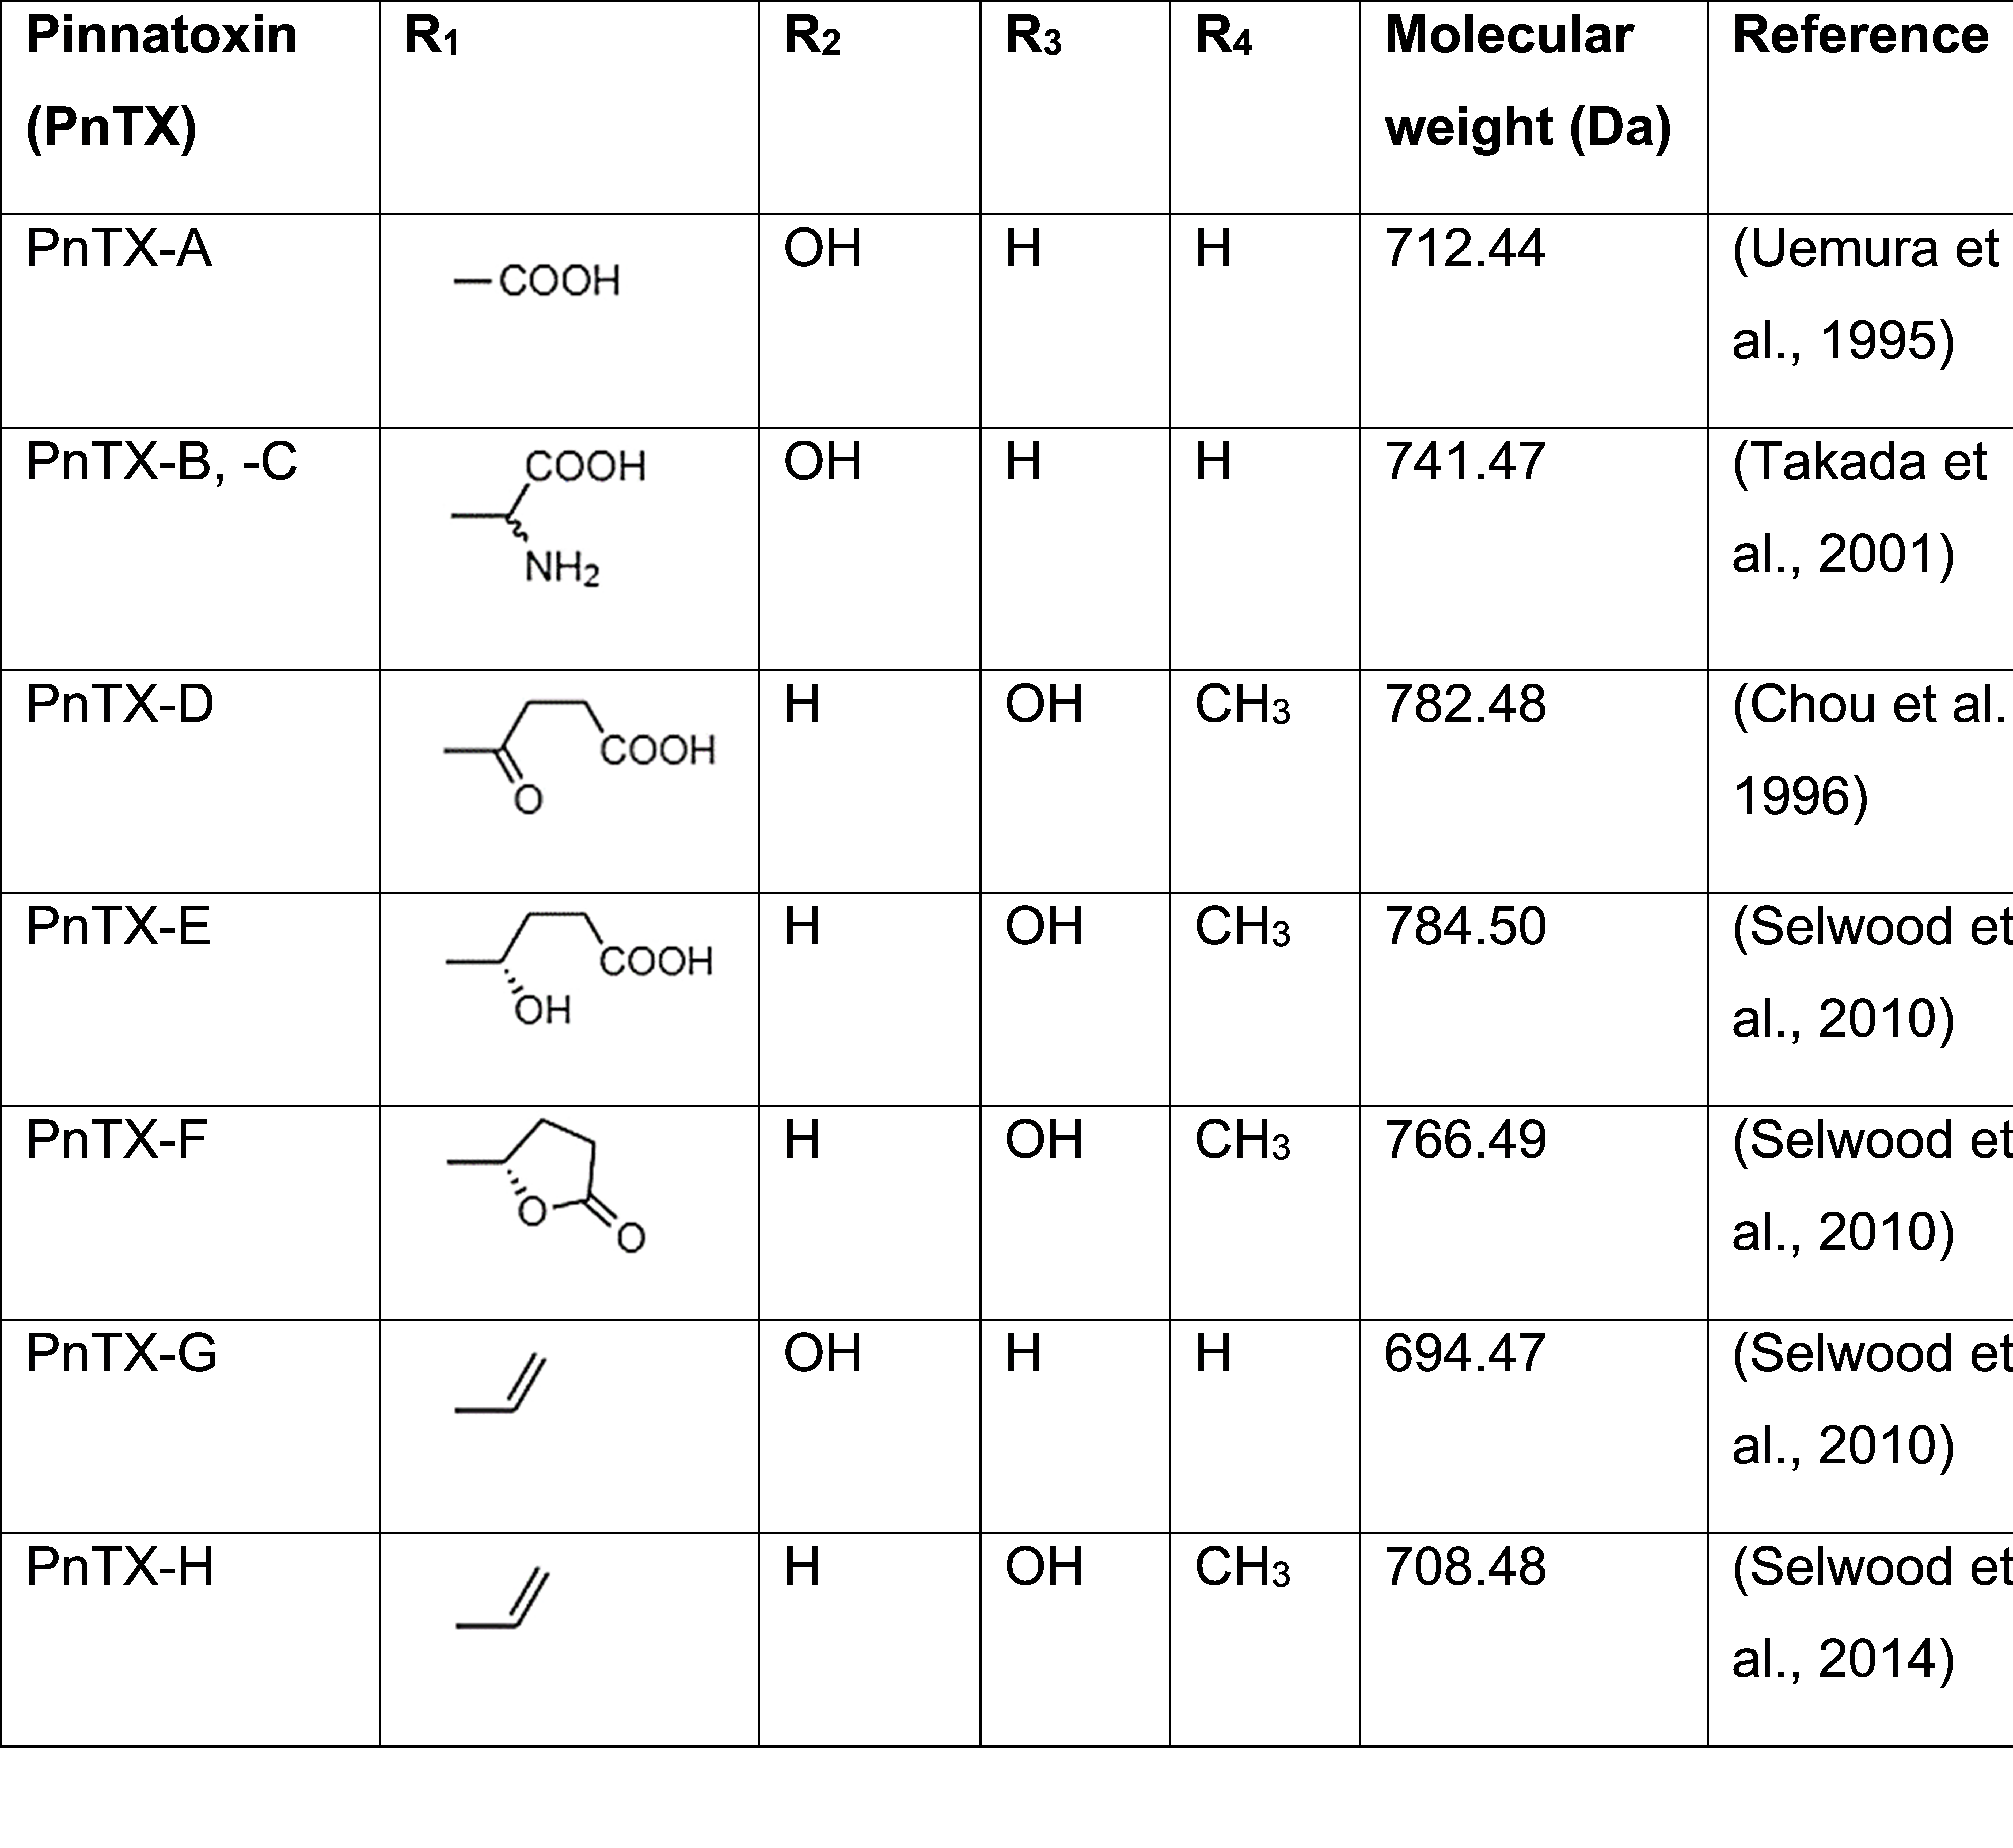 Image is of a a table containing chemical structure diagrams for PnTX-A, PnTX-B -C, PnTX-D, PnTX-E, PnTX-F, PnTX-G, PnTX-H.